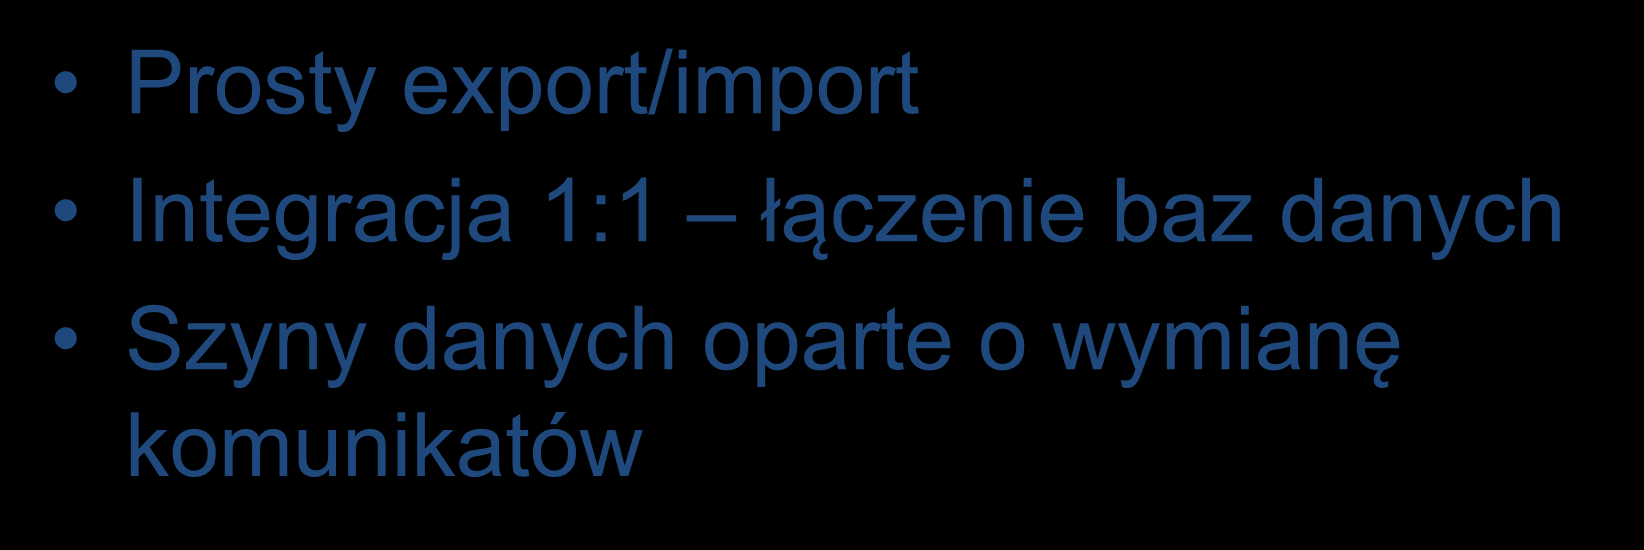 Integracja danych Prosty export/import Integracja 1:1